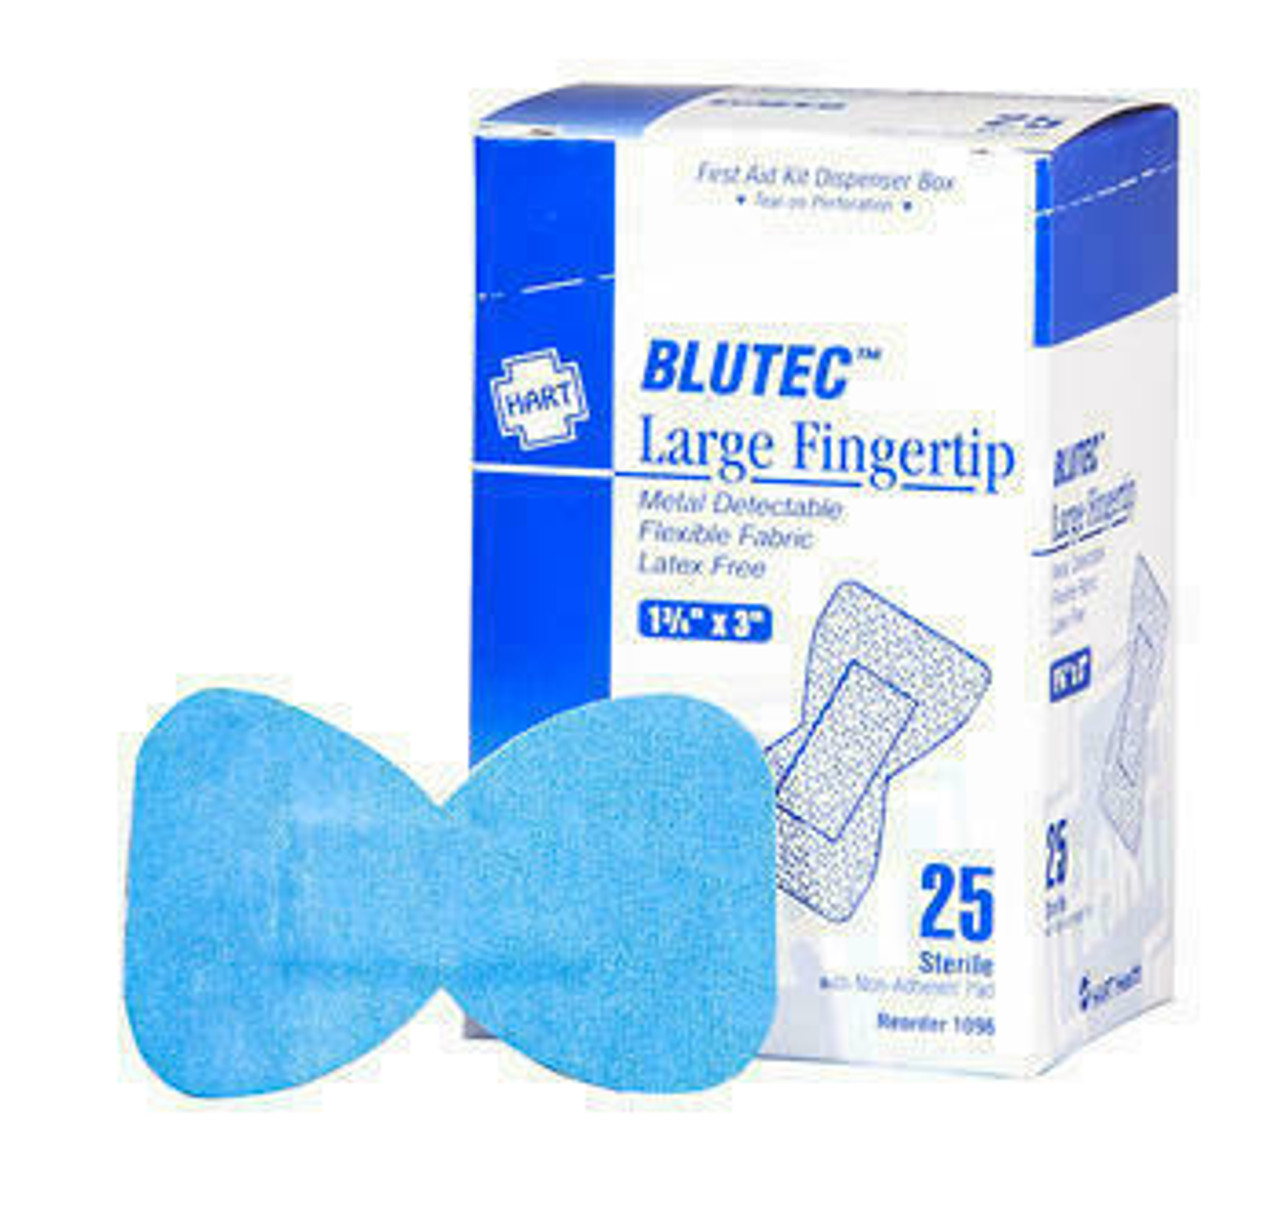 Hart Health® BLUTEC™ Finger Bandage - Blue Metal Detectable Band Aid